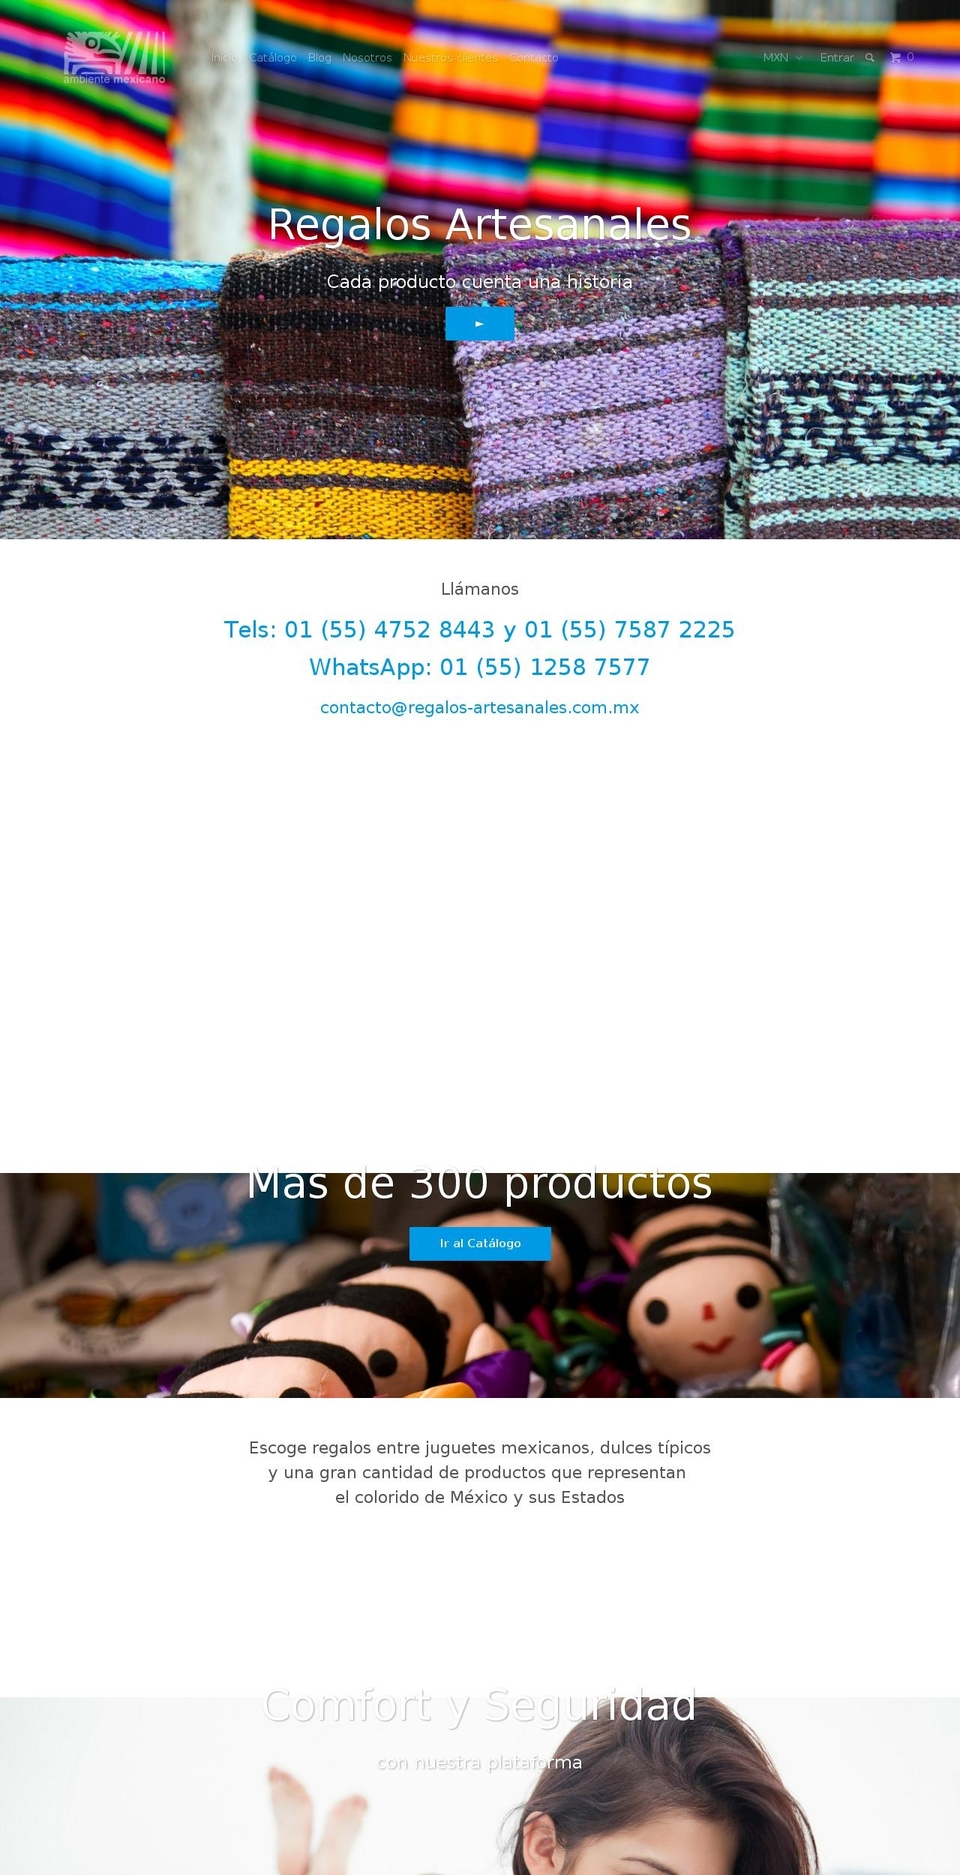 regalos-artesanales.com.mx shopify website screenshot